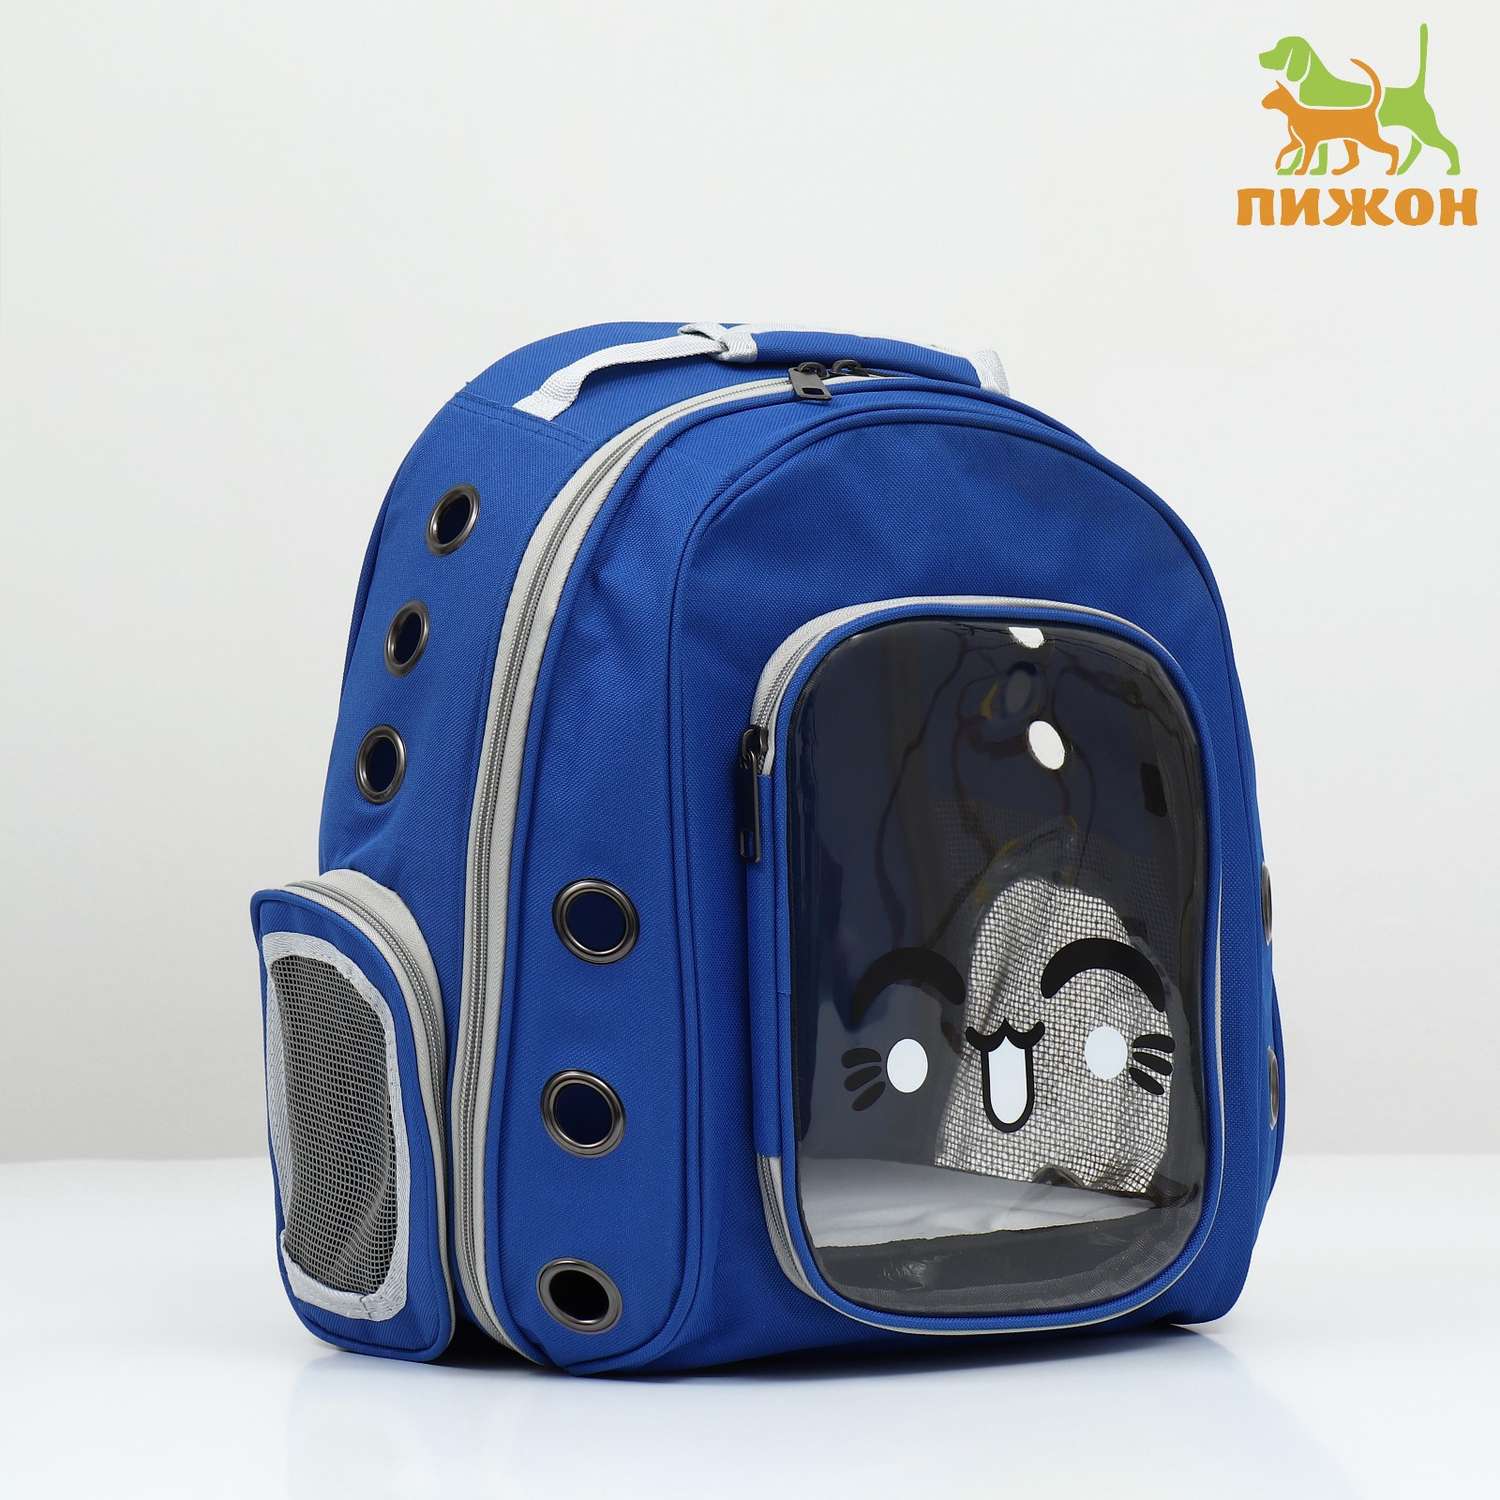 Рюкзак для переноски Пижон с окном для обзора синий - фото 1